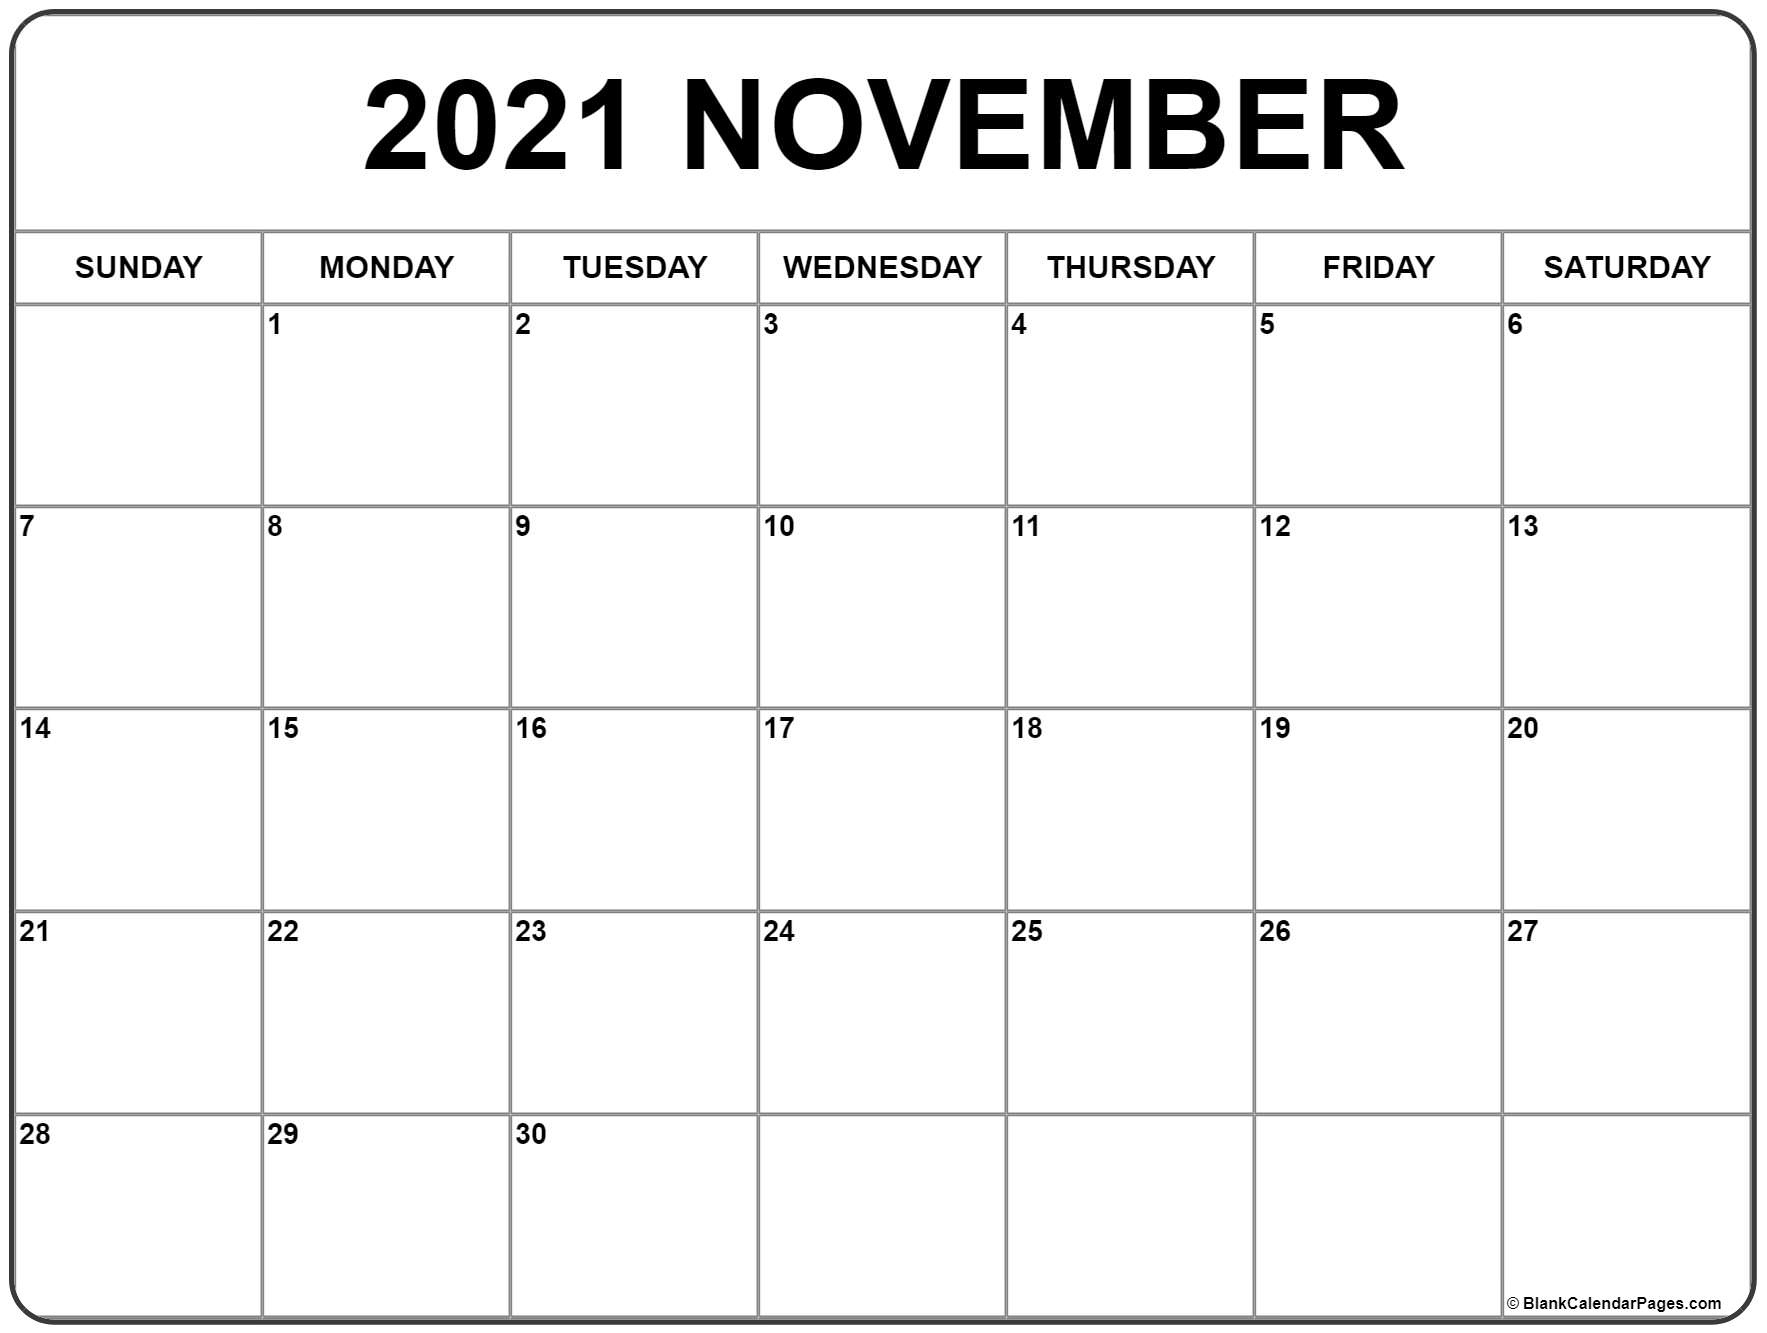 2021 November Calendar Free Printable | Example Calendar November 2021 Calendar Xl